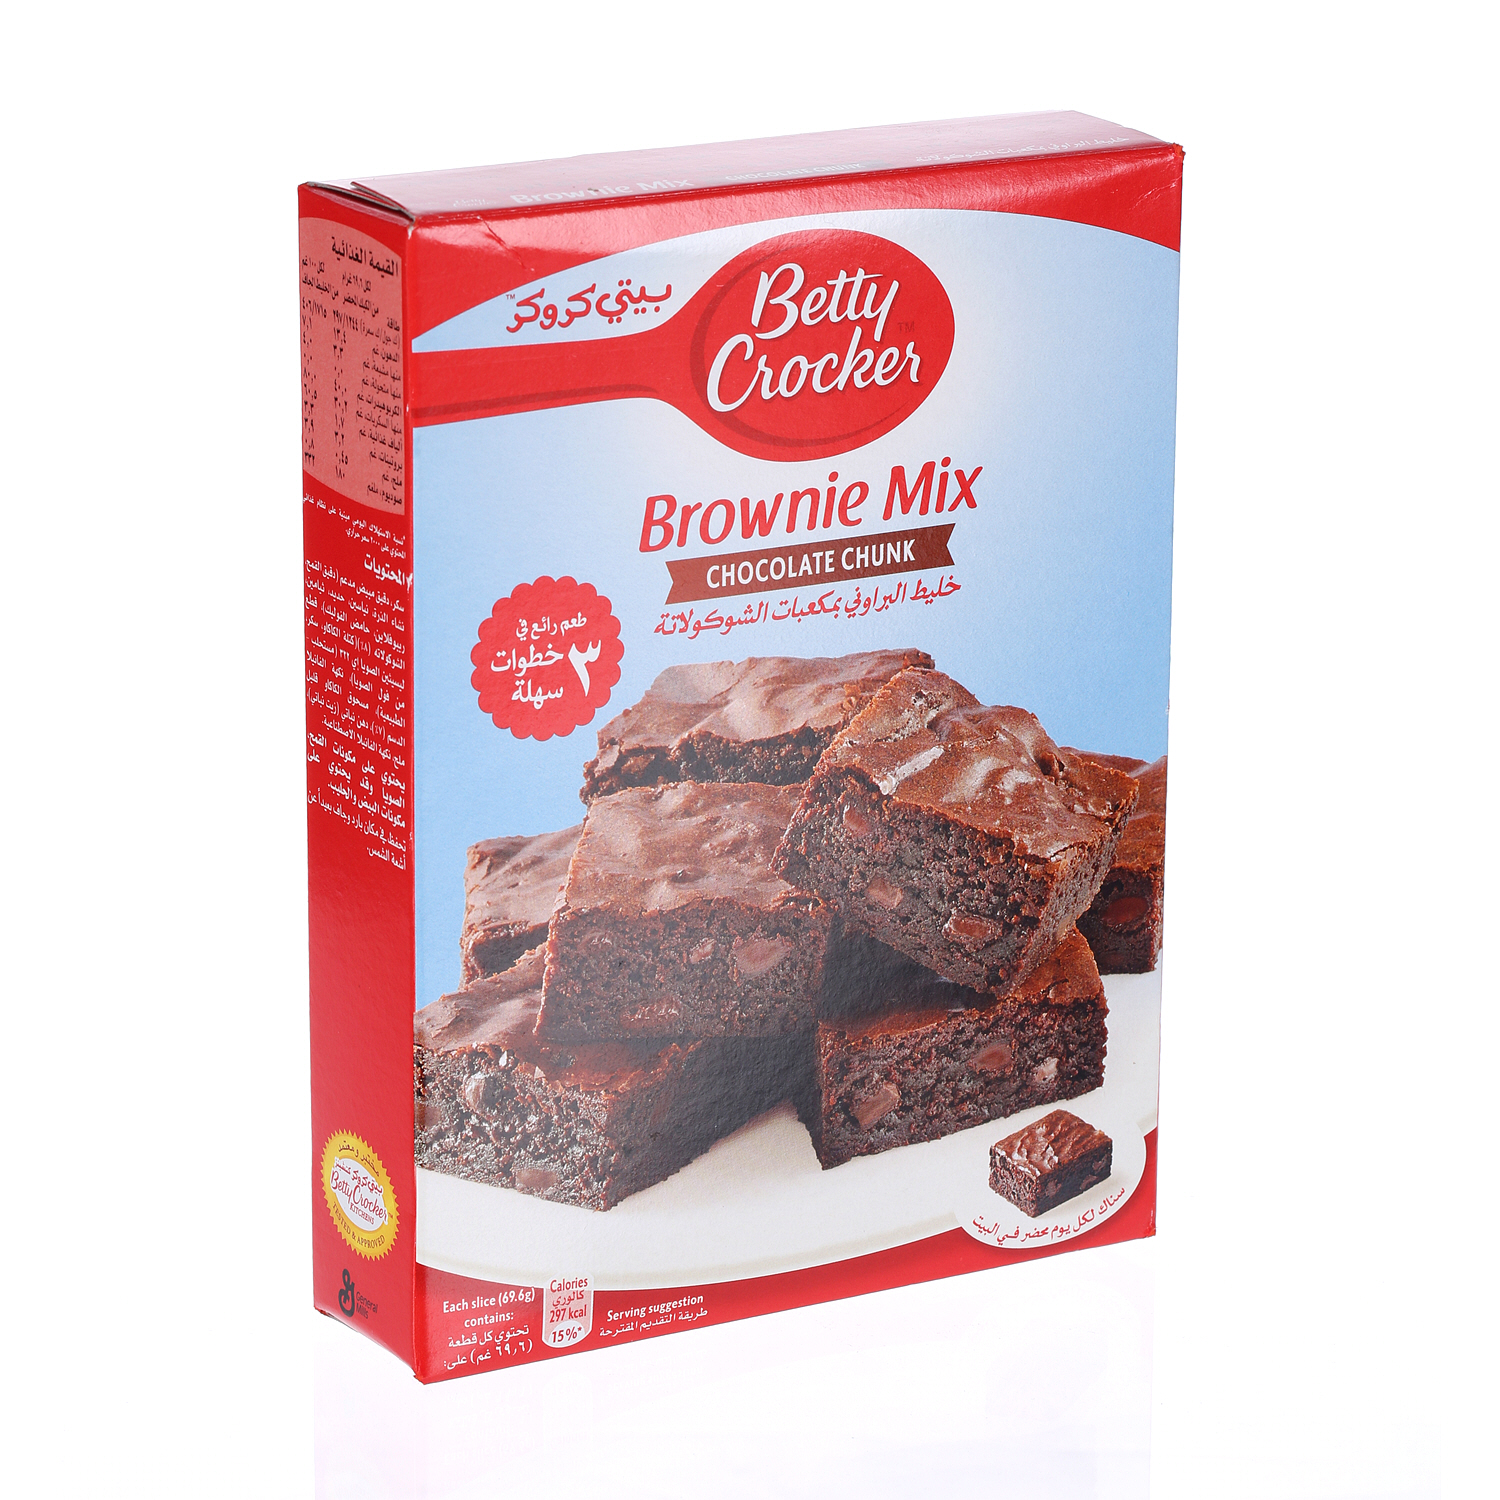 Betty Crocker Brownie Mix Choco Chunk 500gm